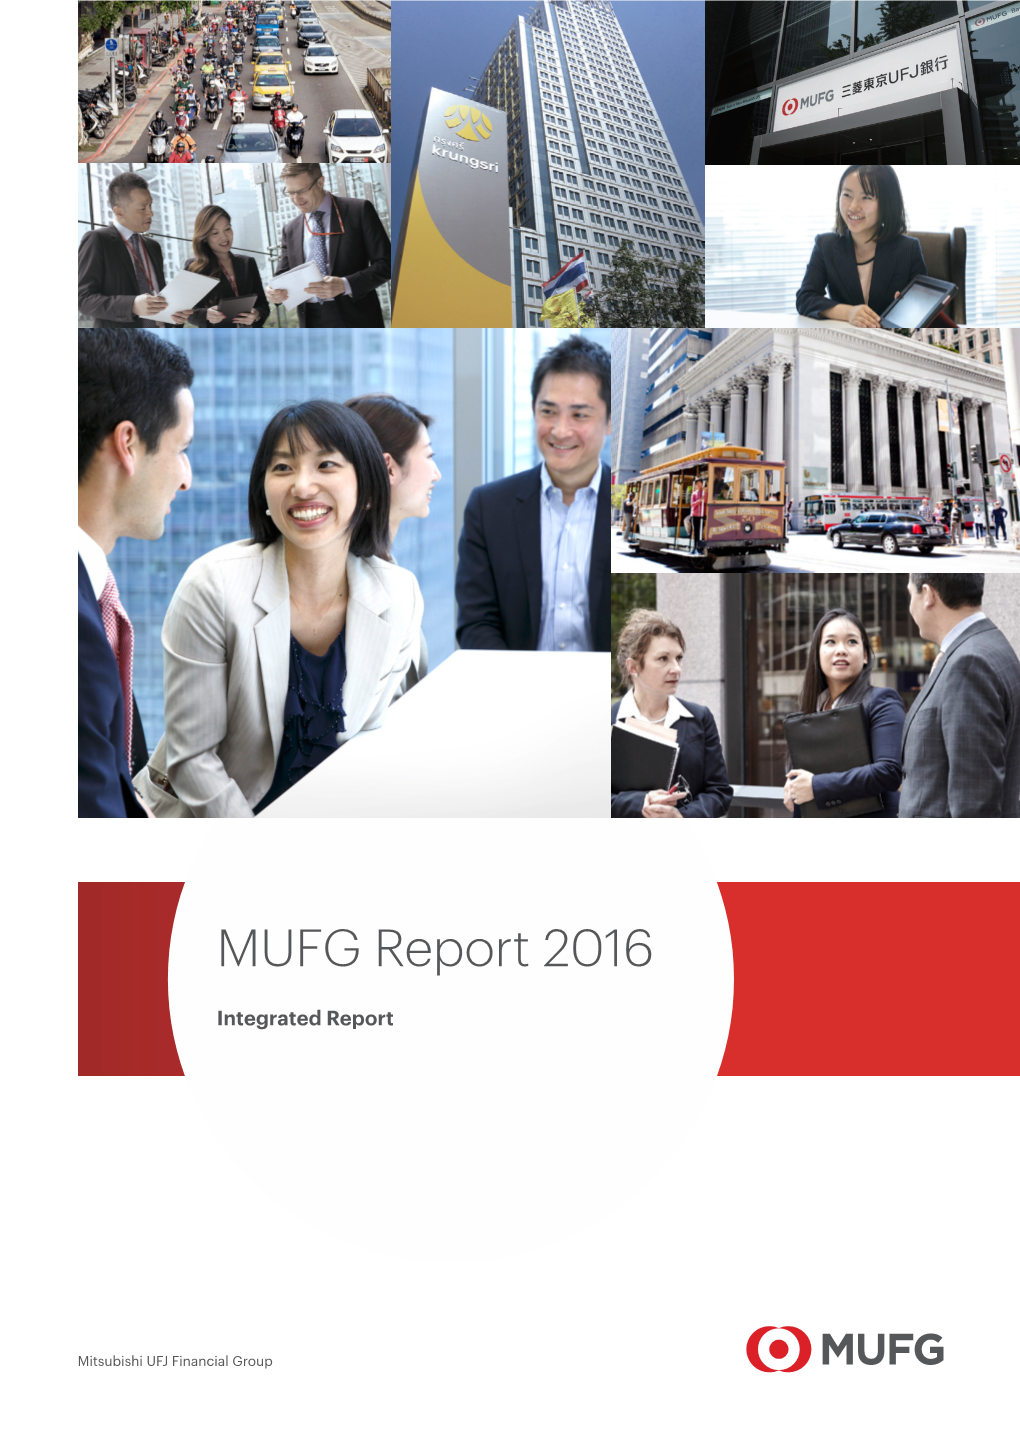 MUFG Report 2016 Integrated Report